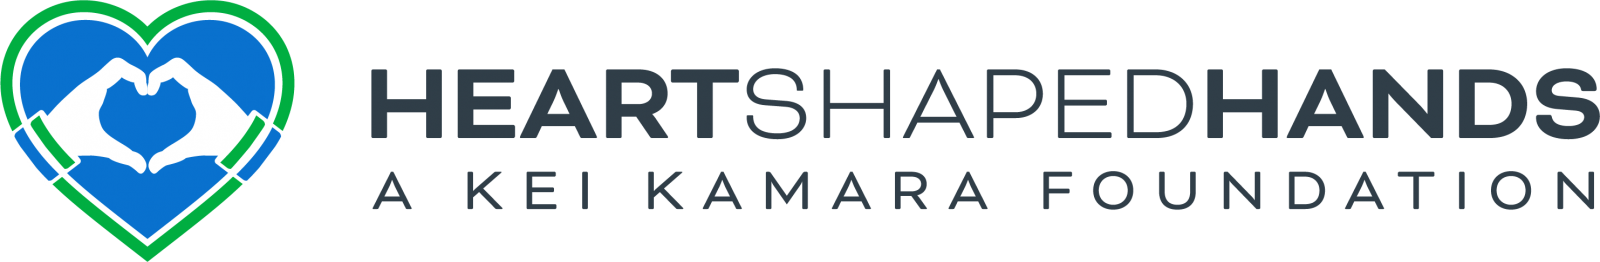 Academy Kei Kamara HeartShapedHands Foundation